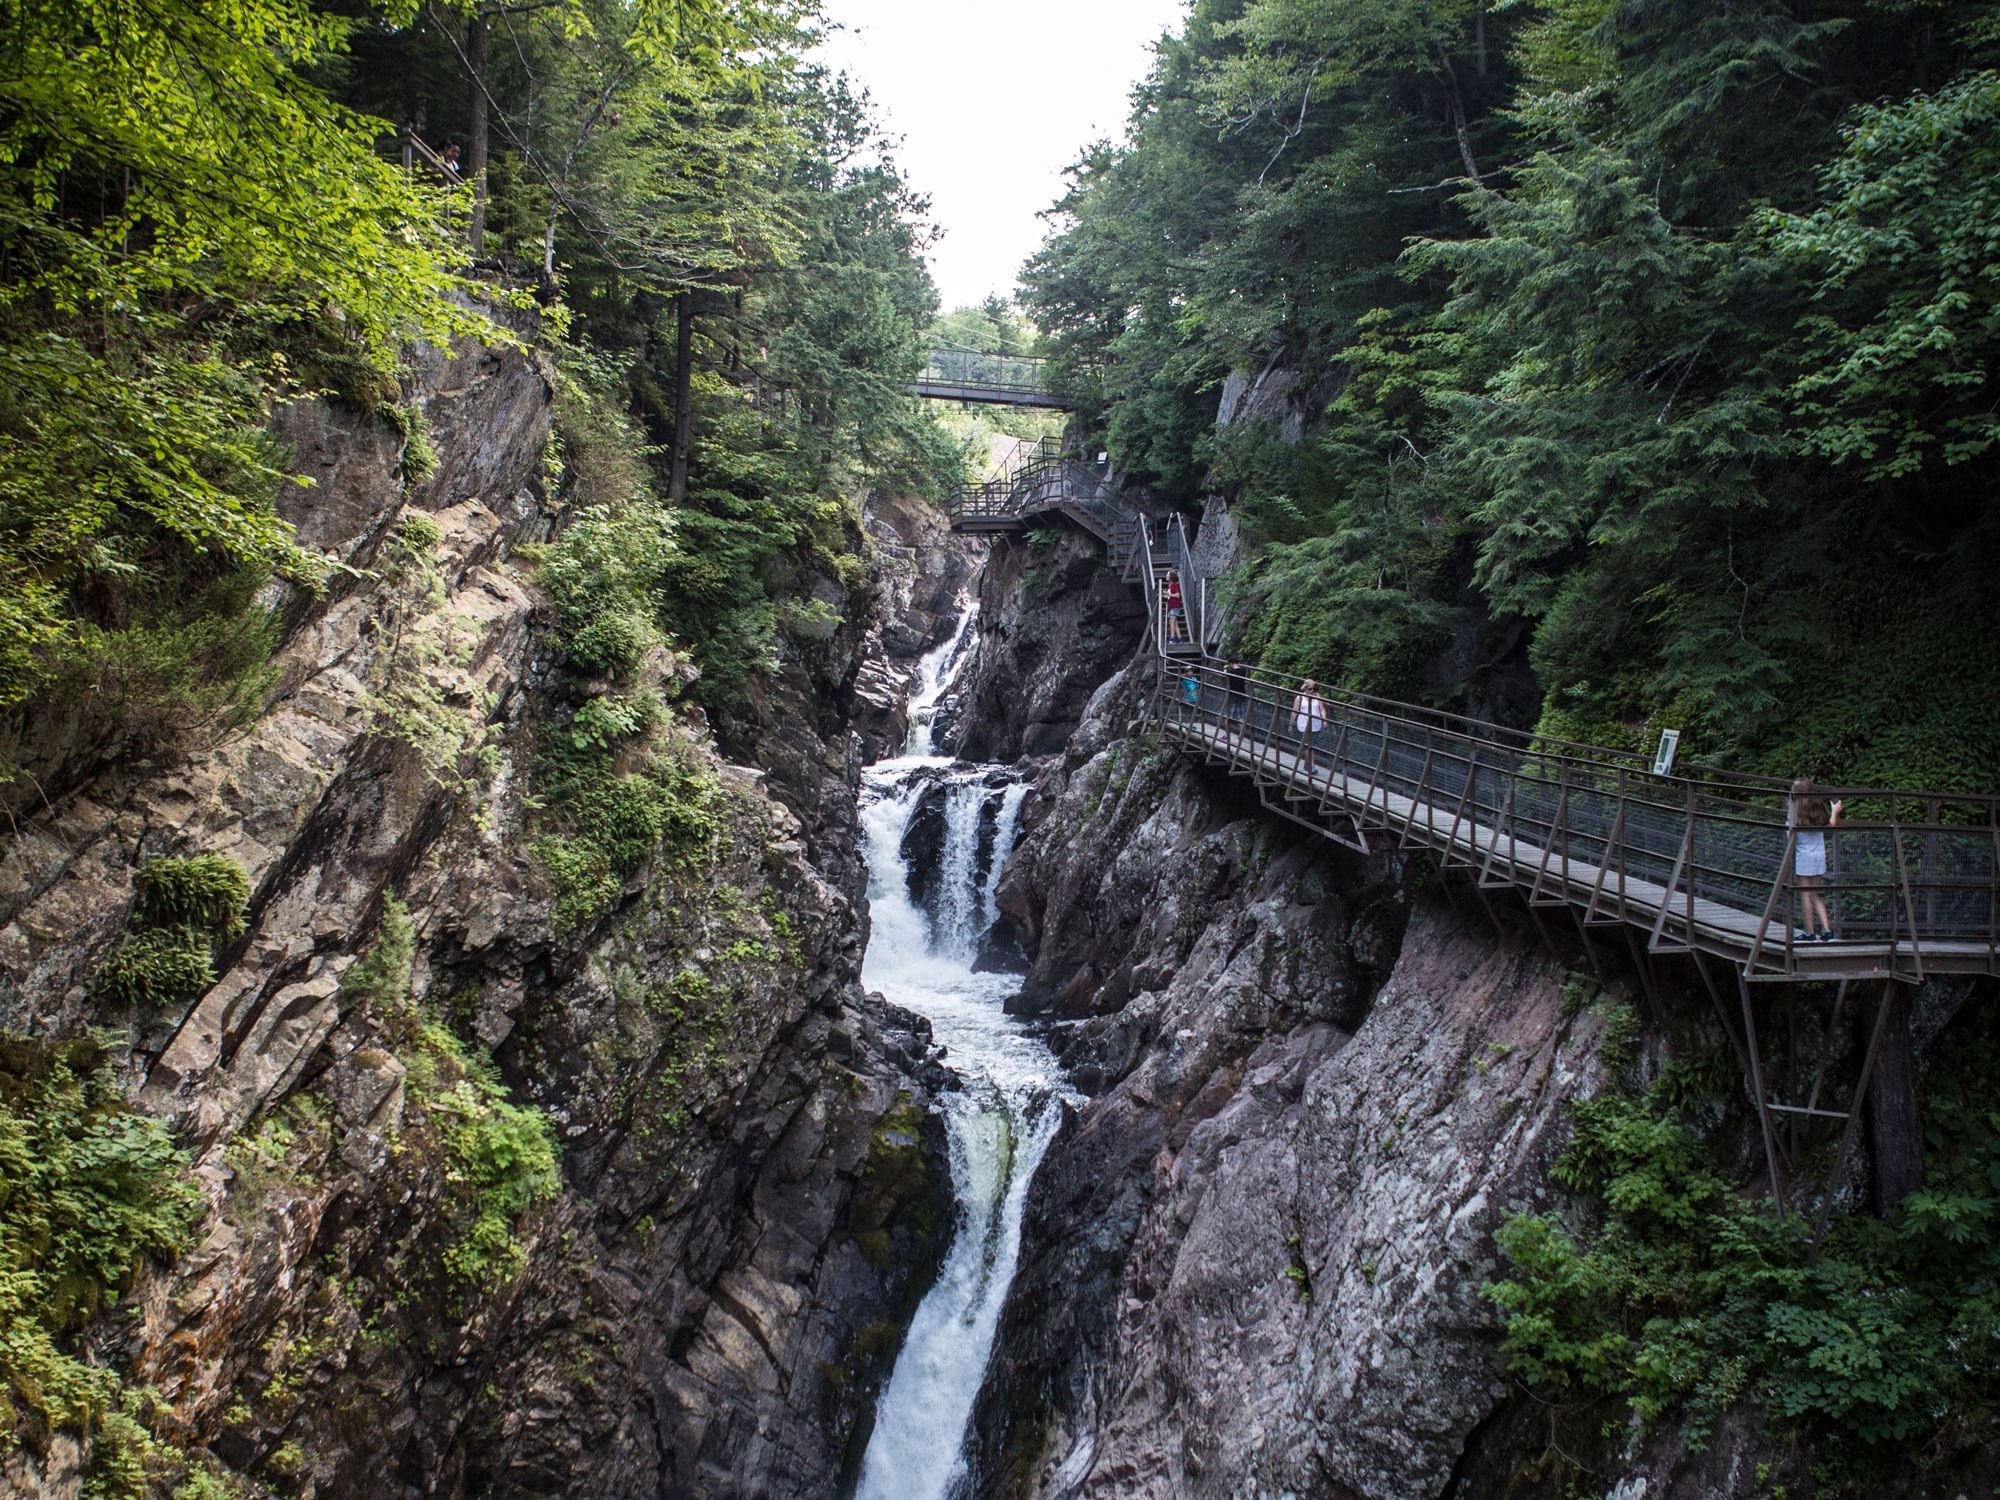 Platform walkways at High Falls Gorge waterfall near High Peaks